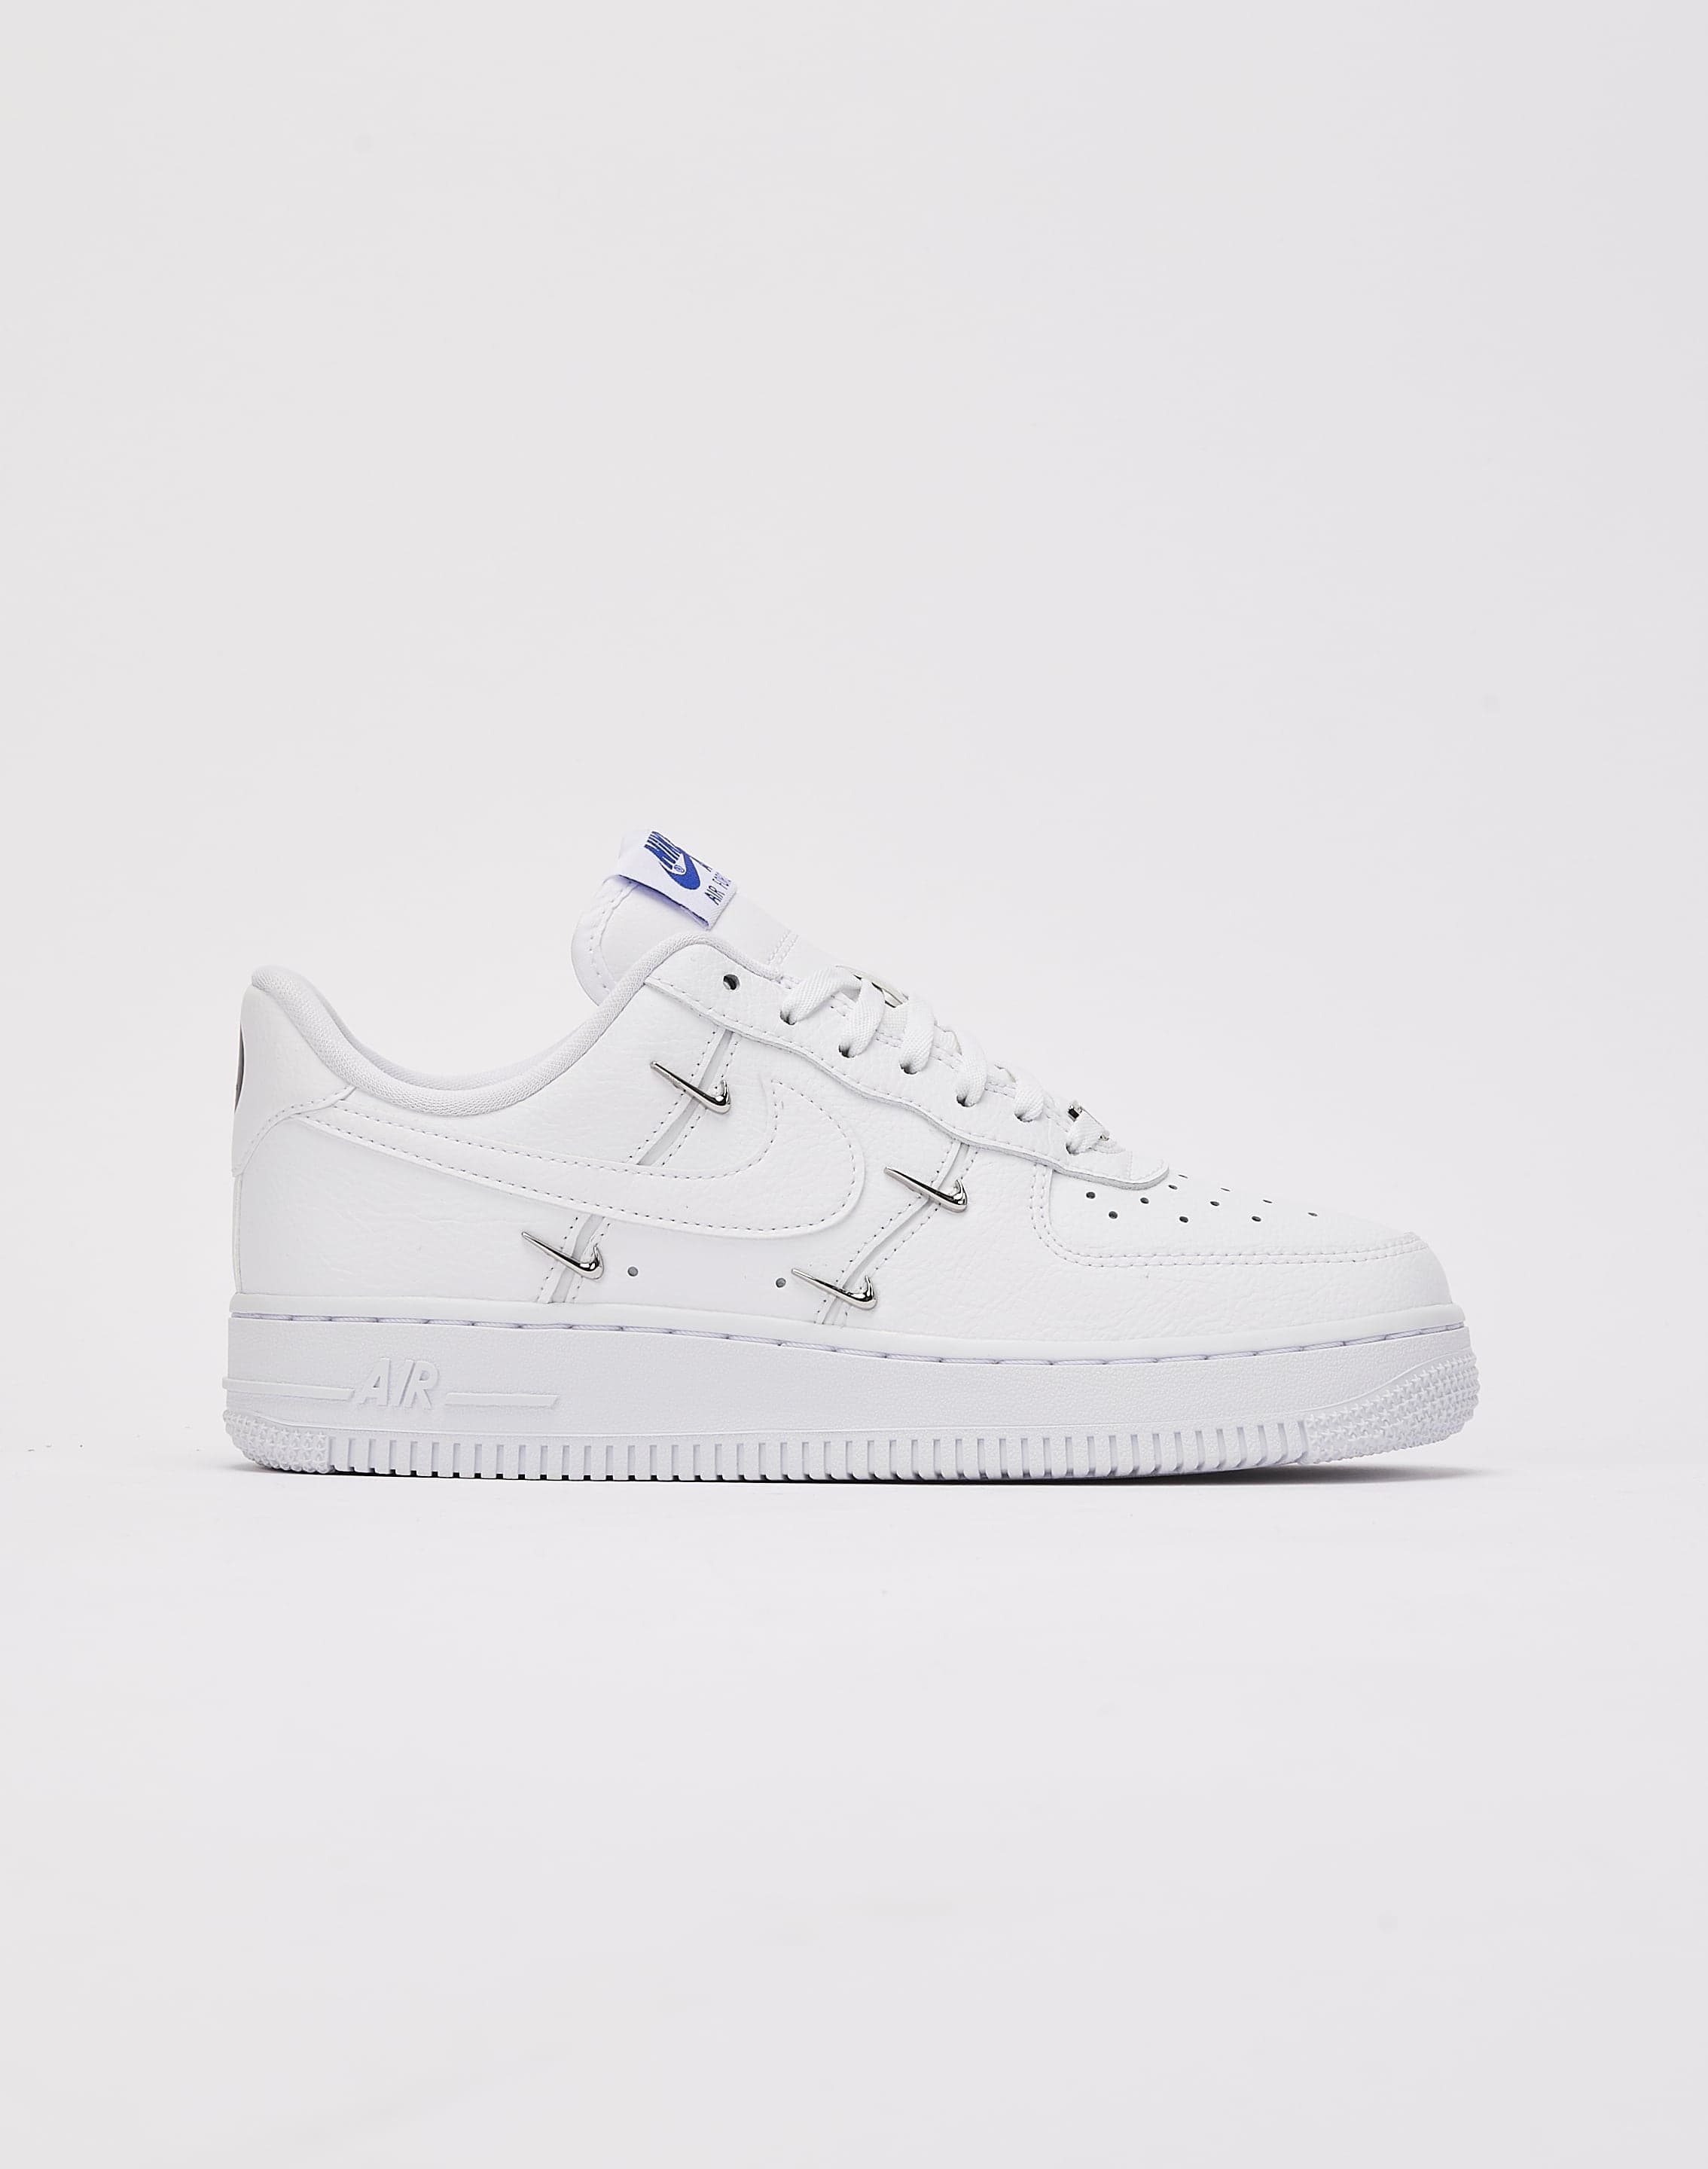 Nike Air Force 1 '07 LX Sneakers White/White 8.5